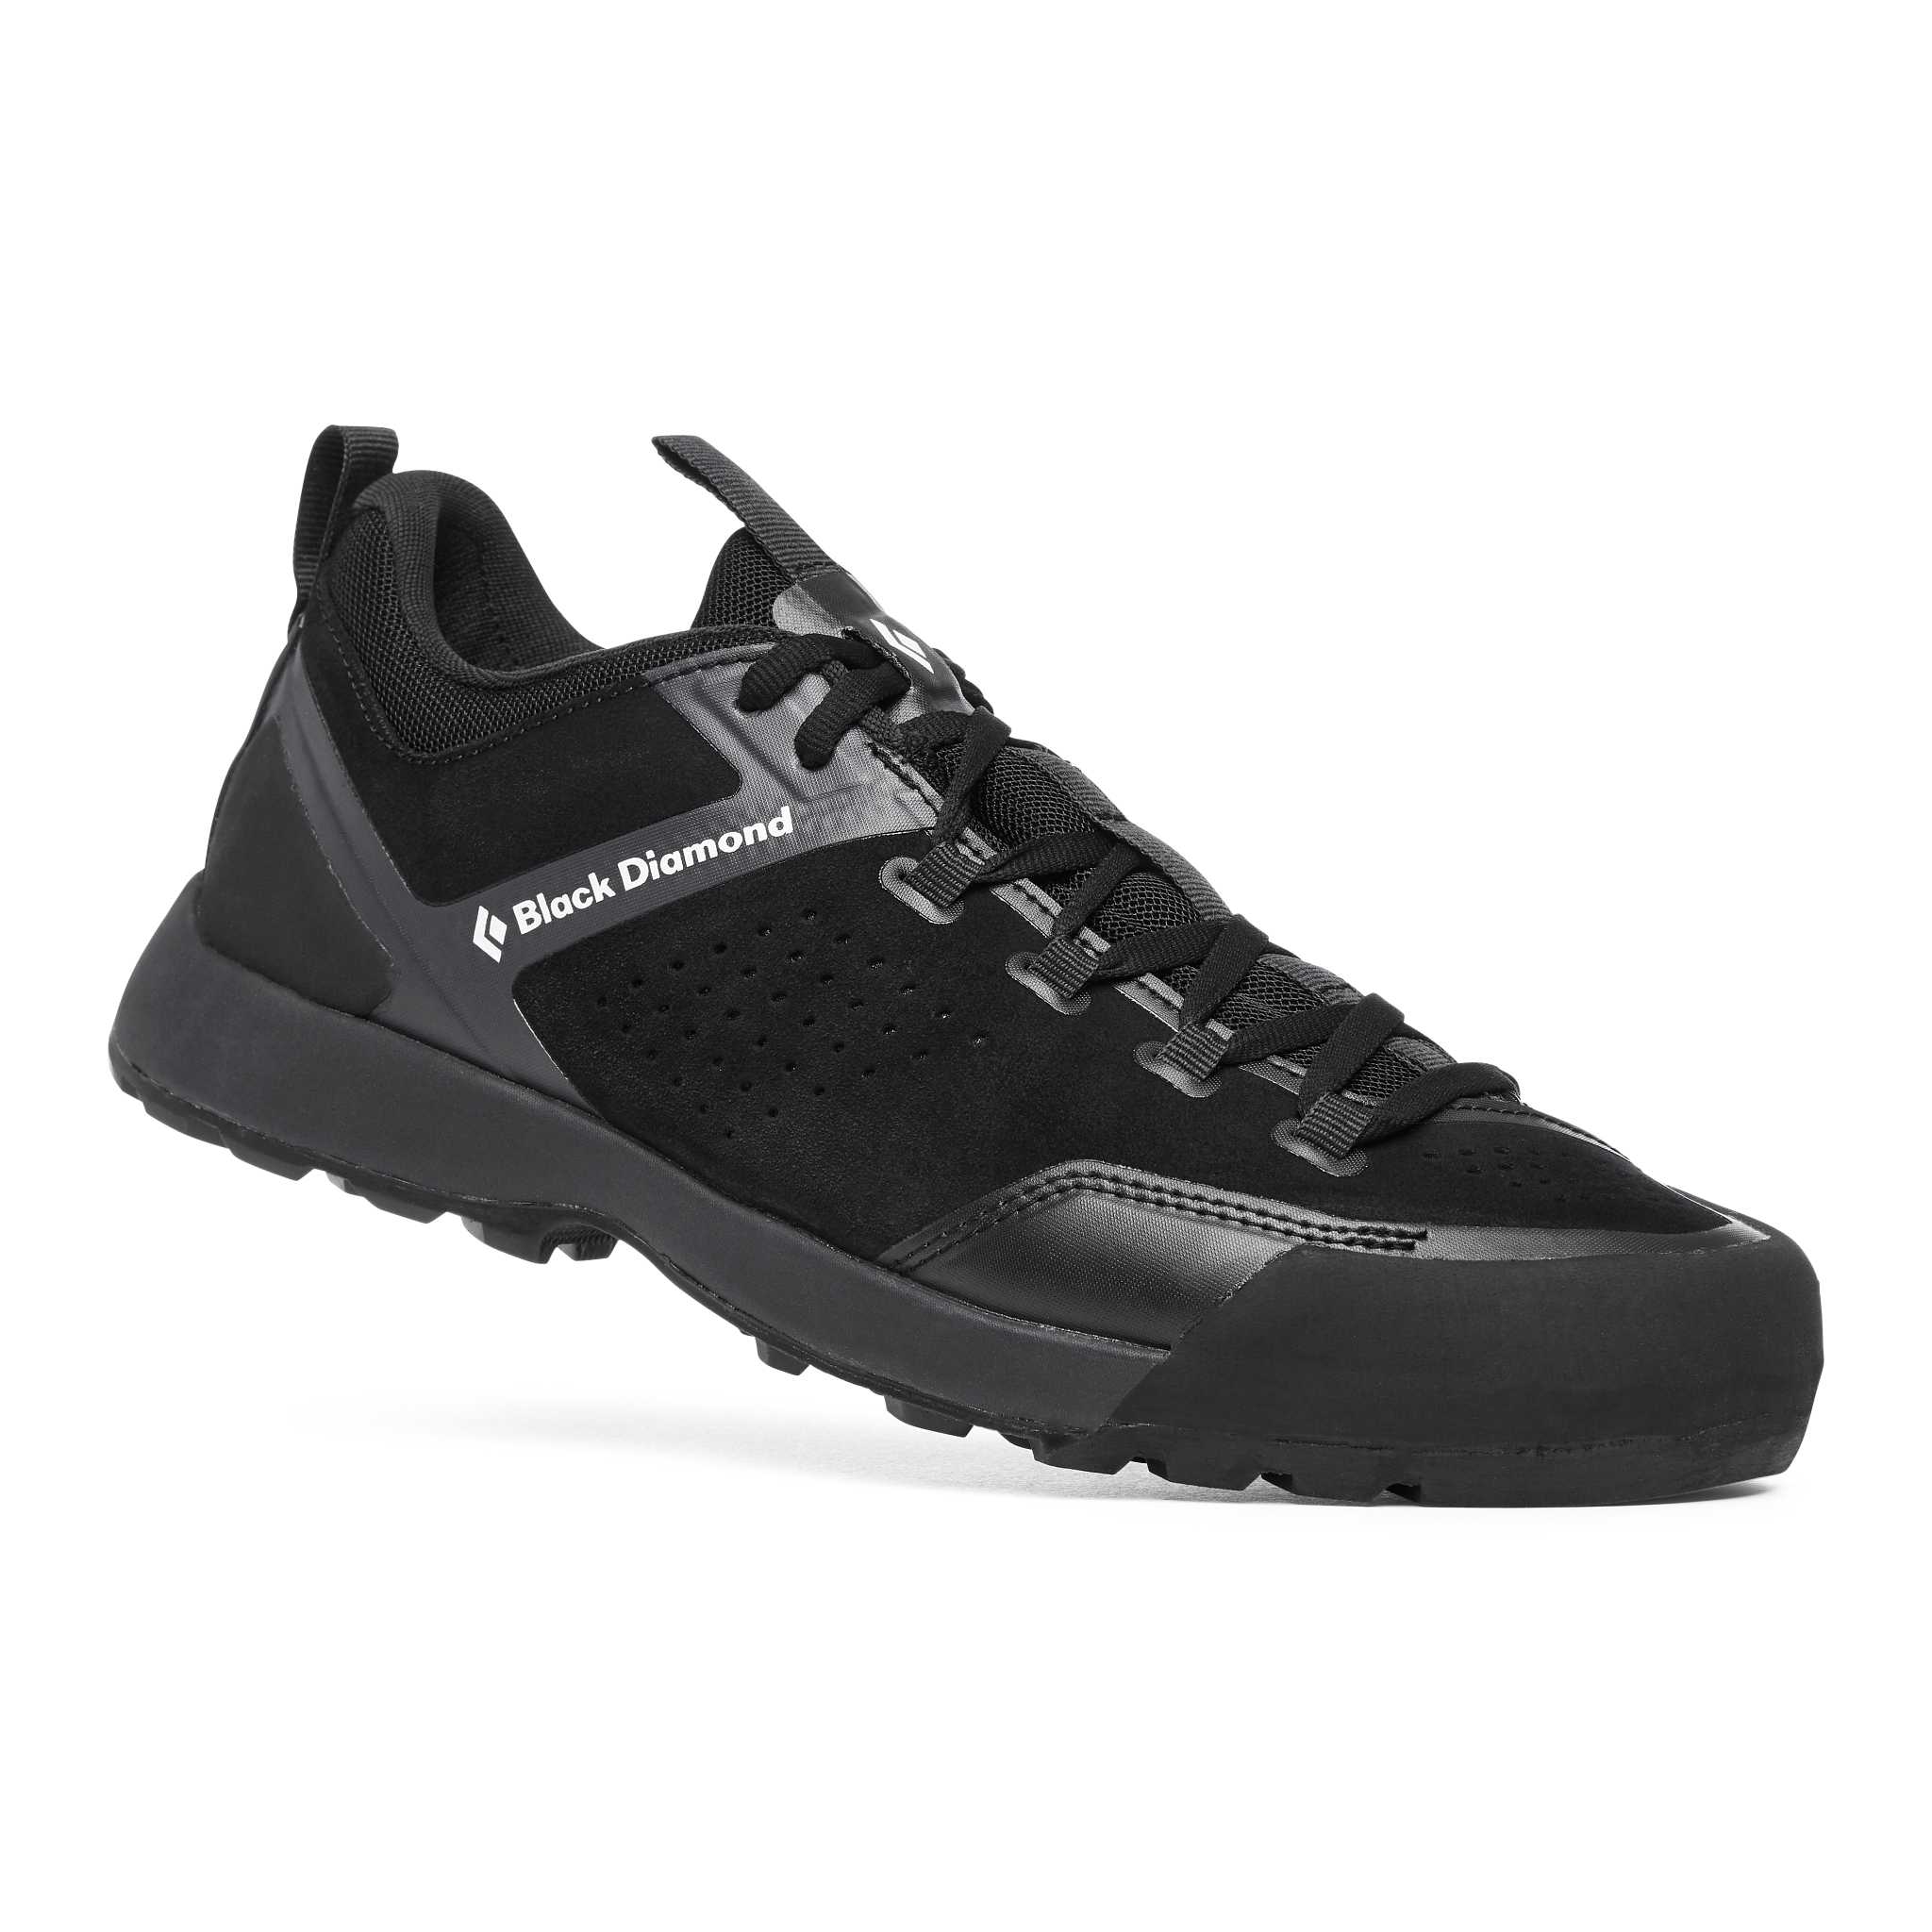 Black Diamond Equipment Men's Mission XP Leather Approach Shoes US 9 Black/Granite